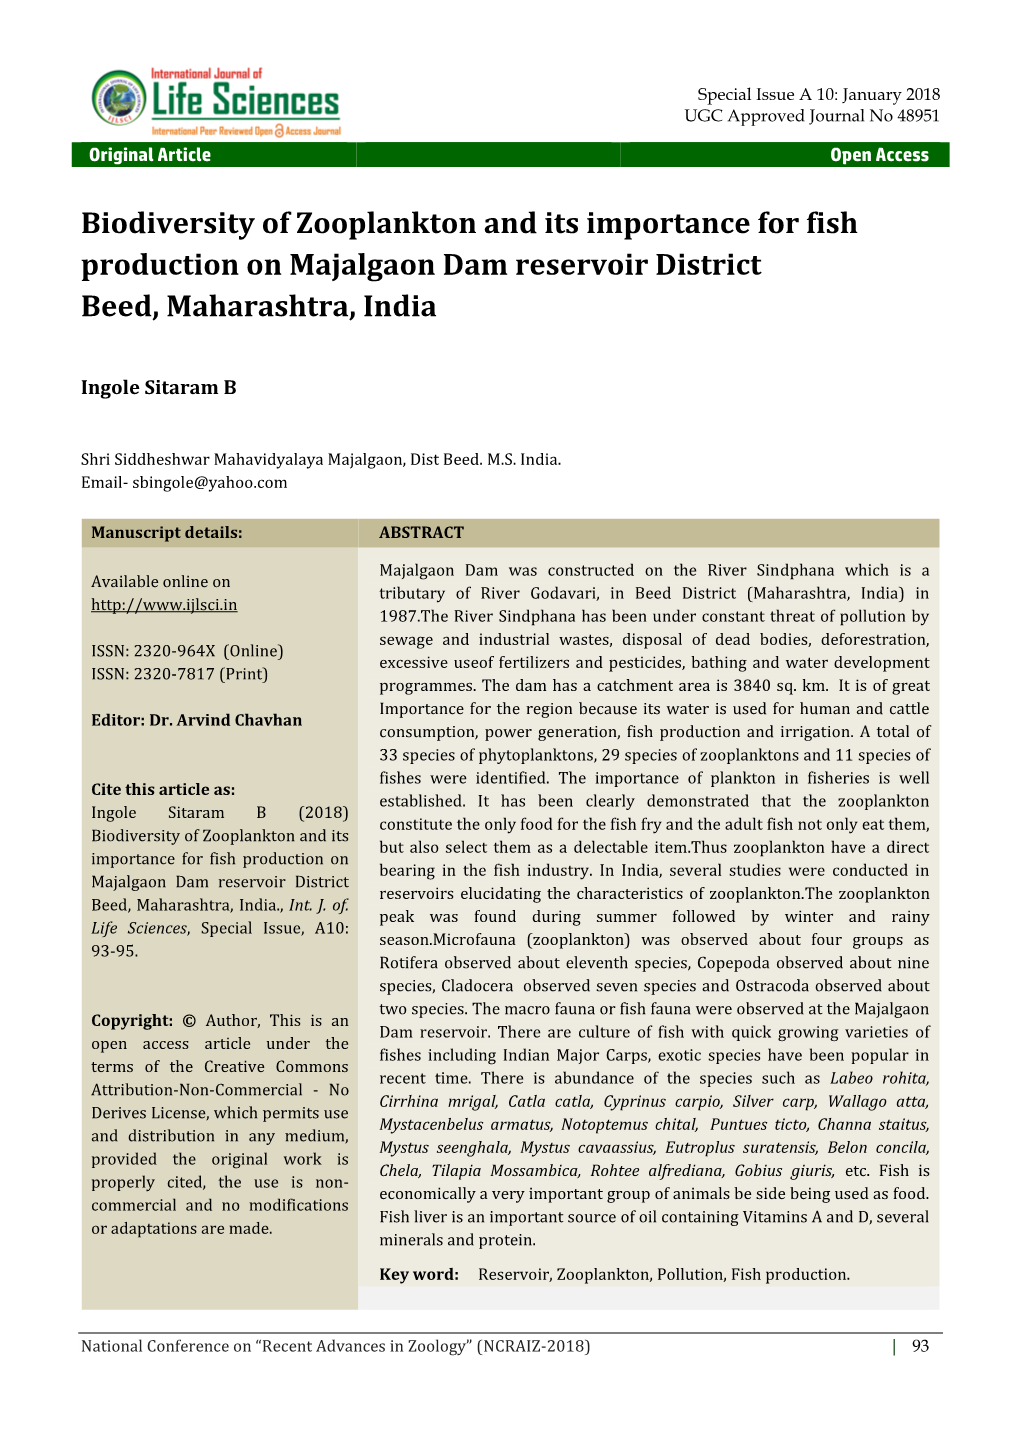 Biodiversity of Zooplankton and Its Importance for Fish Production on Majalgaon Dam Reservoir District Beed, Maharashtra, India